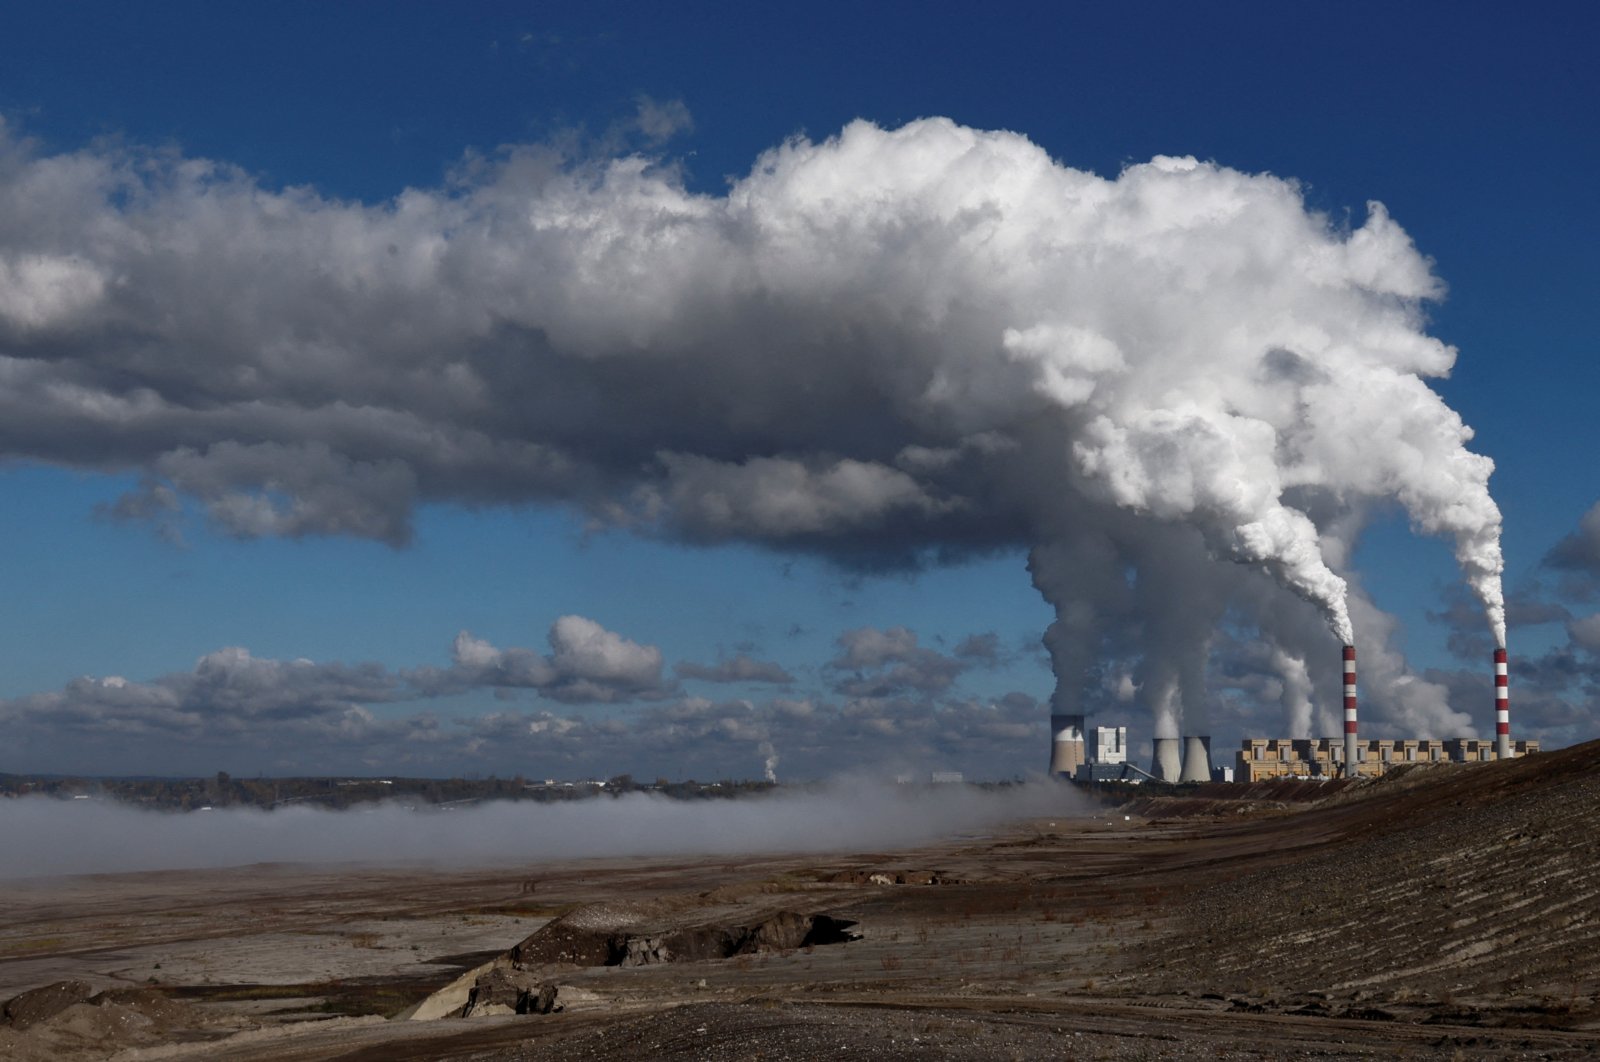 In global 1st, EU strikes deal on carbon border tariff